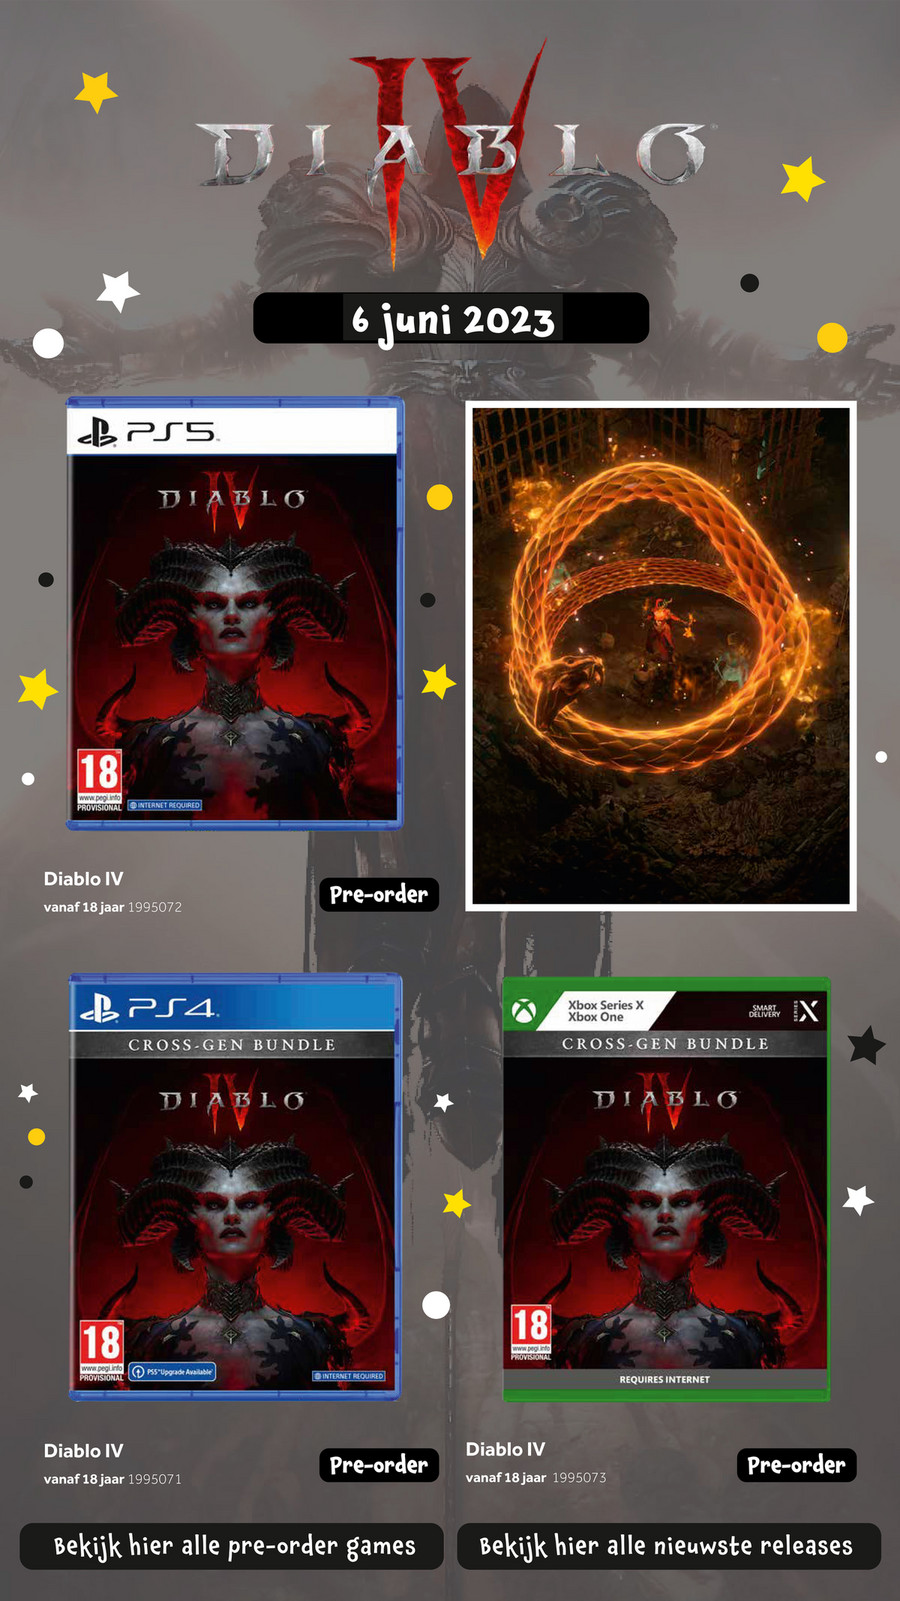 Ligatie prachtig Plaats Intertoys_NL - Intertoys gaming folder 2023 - Xbox Series X & Xbox One  Diablo IV